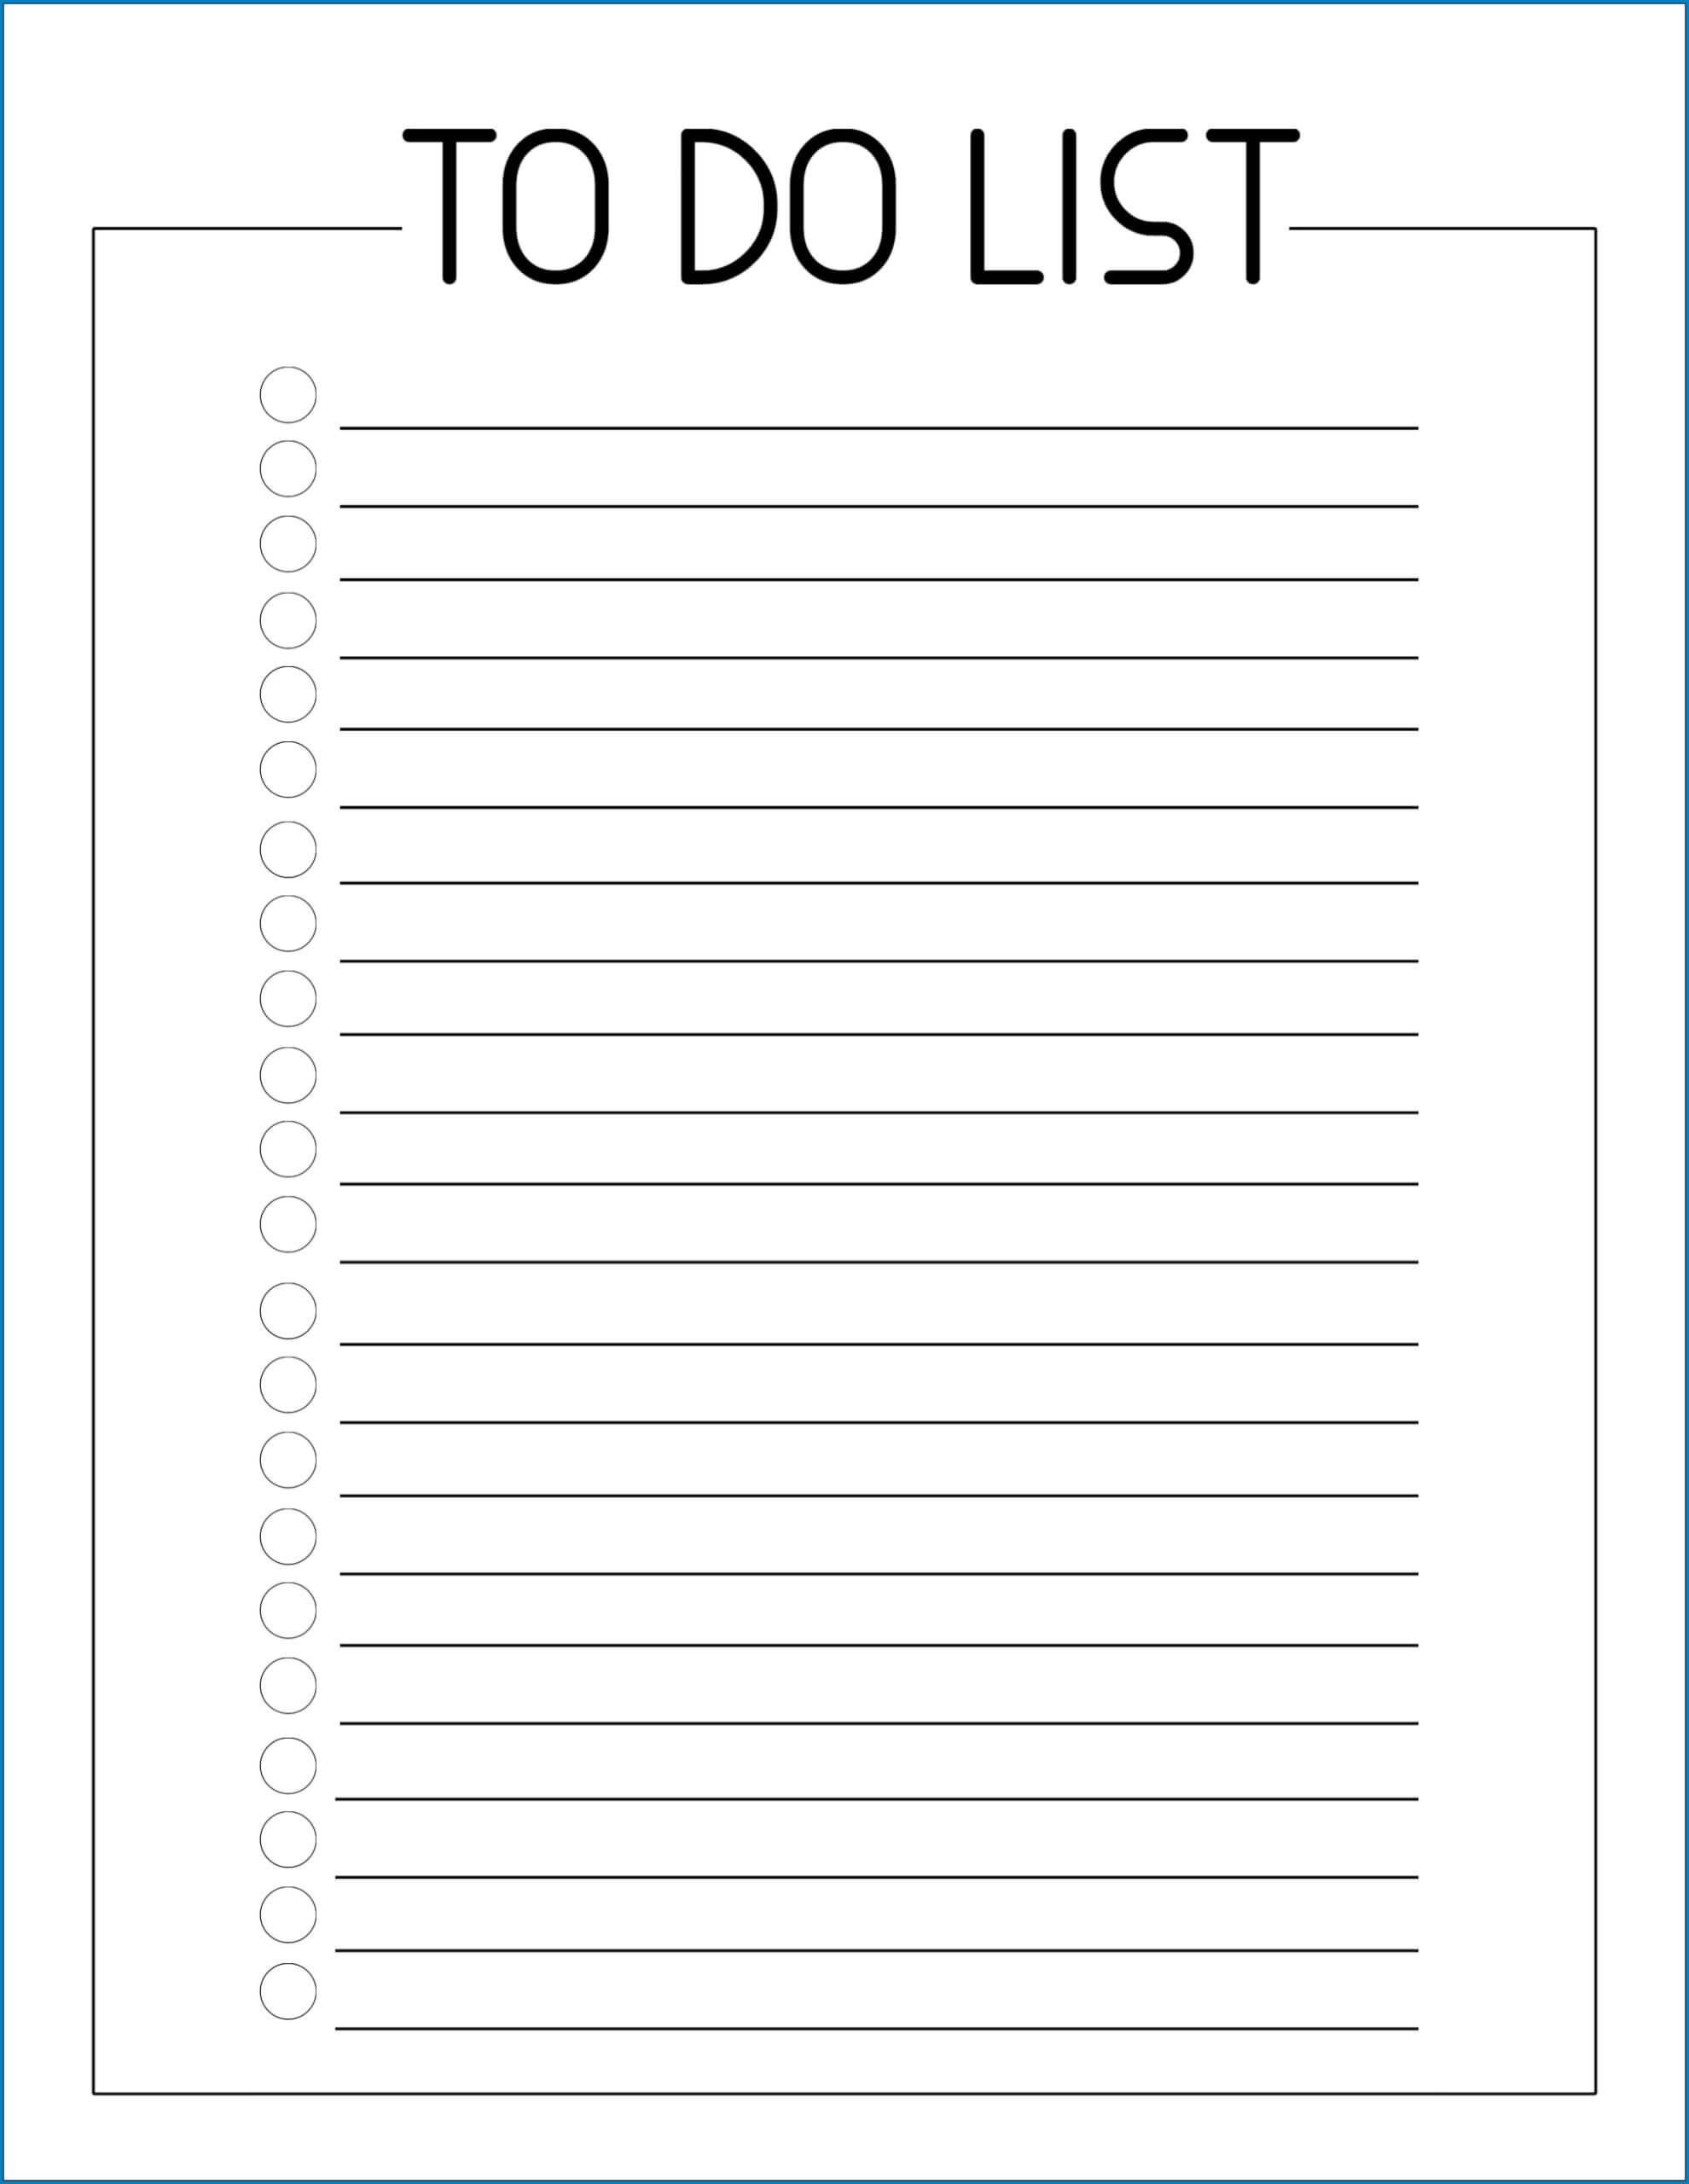 10-collection-printable-to-do-list-blank